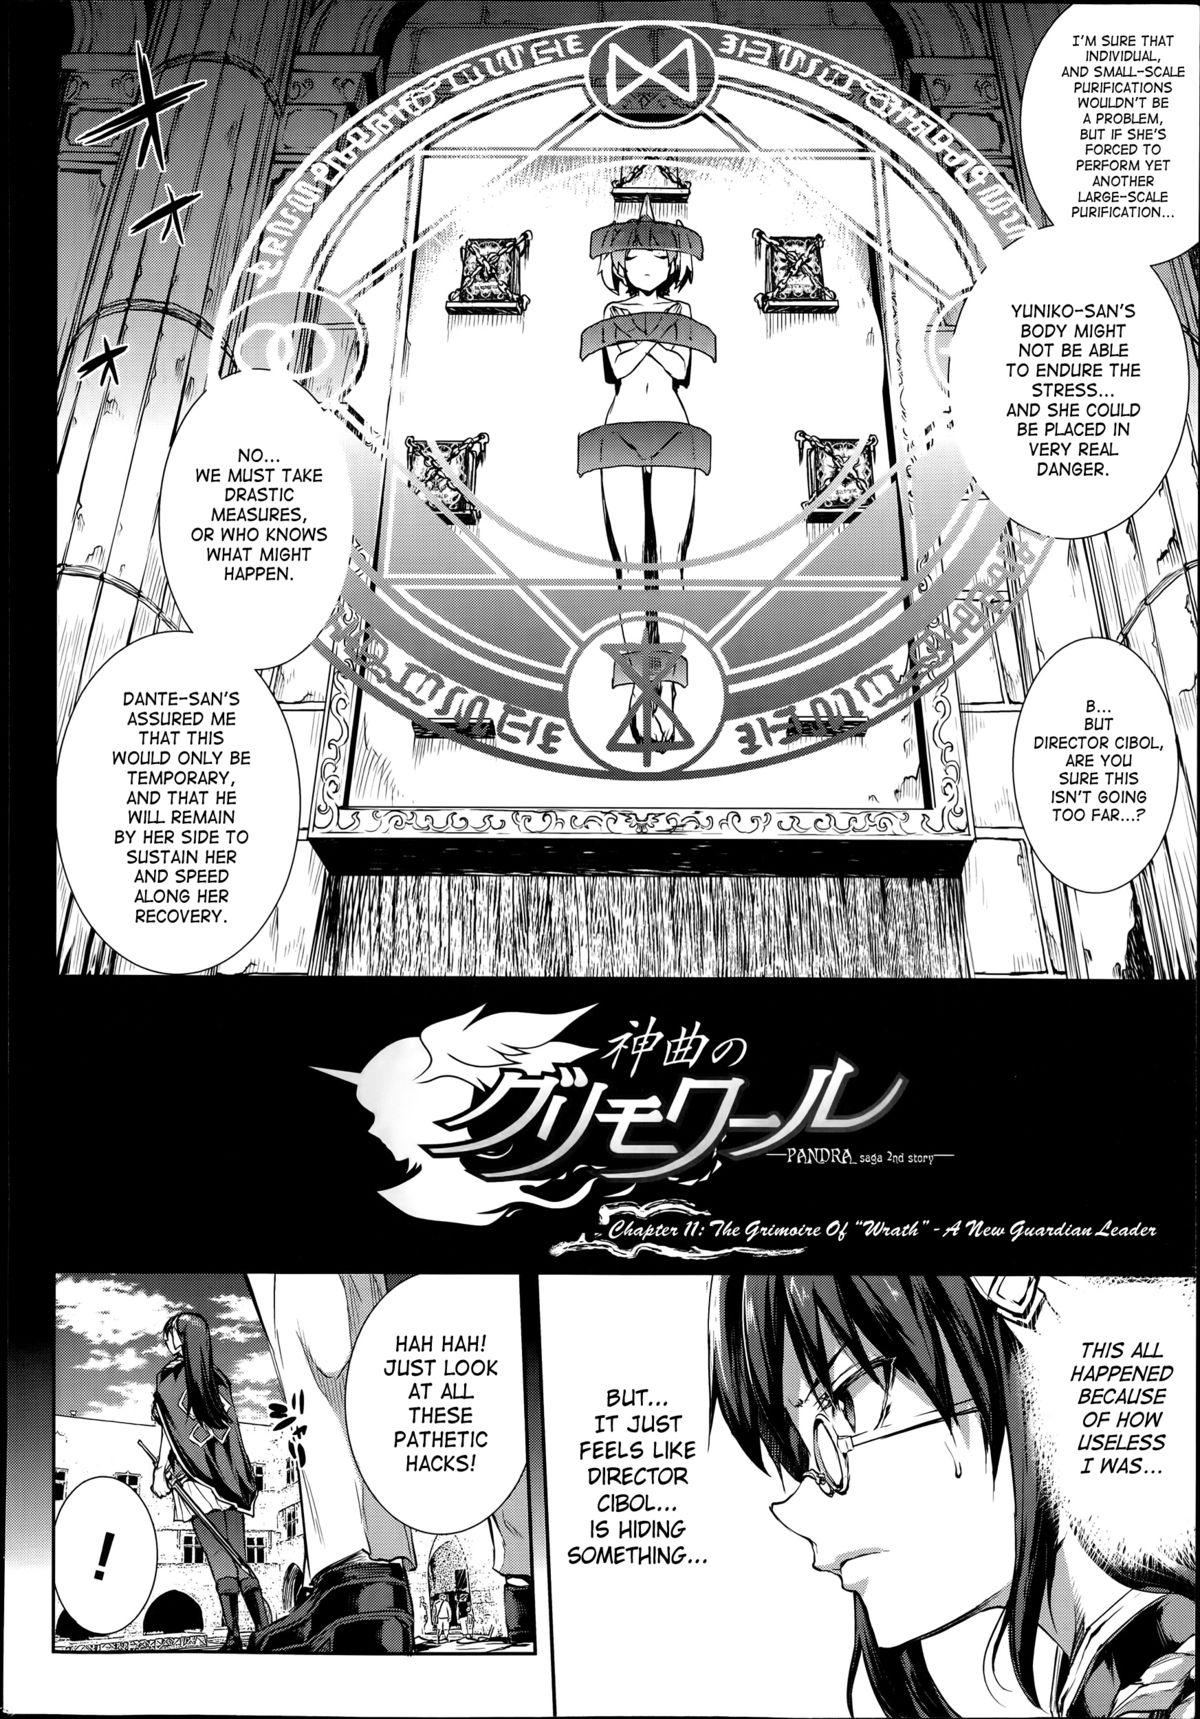 [Erect Sawaru] Shinkyoku no Grimoire -PANDRA saga 2nd story- Ch. 1-19 + Side Story x 3 [English] [SaHa] 332